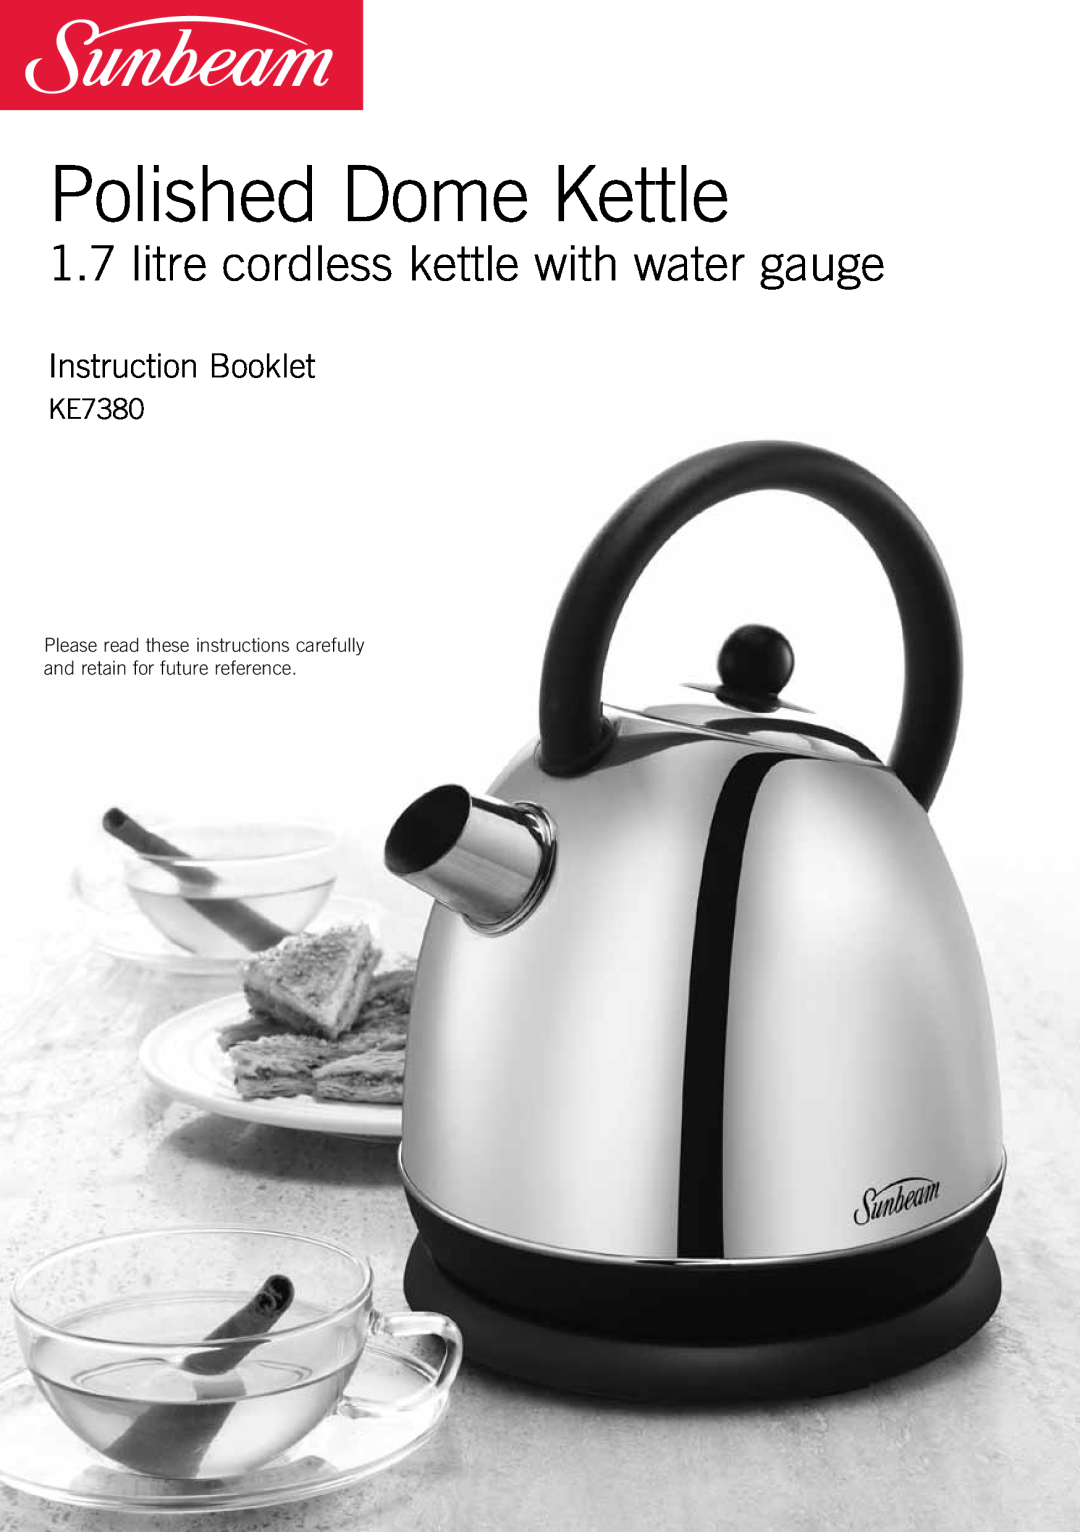 Sunbeam KE7380 manual Polished Dome Kettle, litre cordless kettle with water gauge, Instruction Booklet 